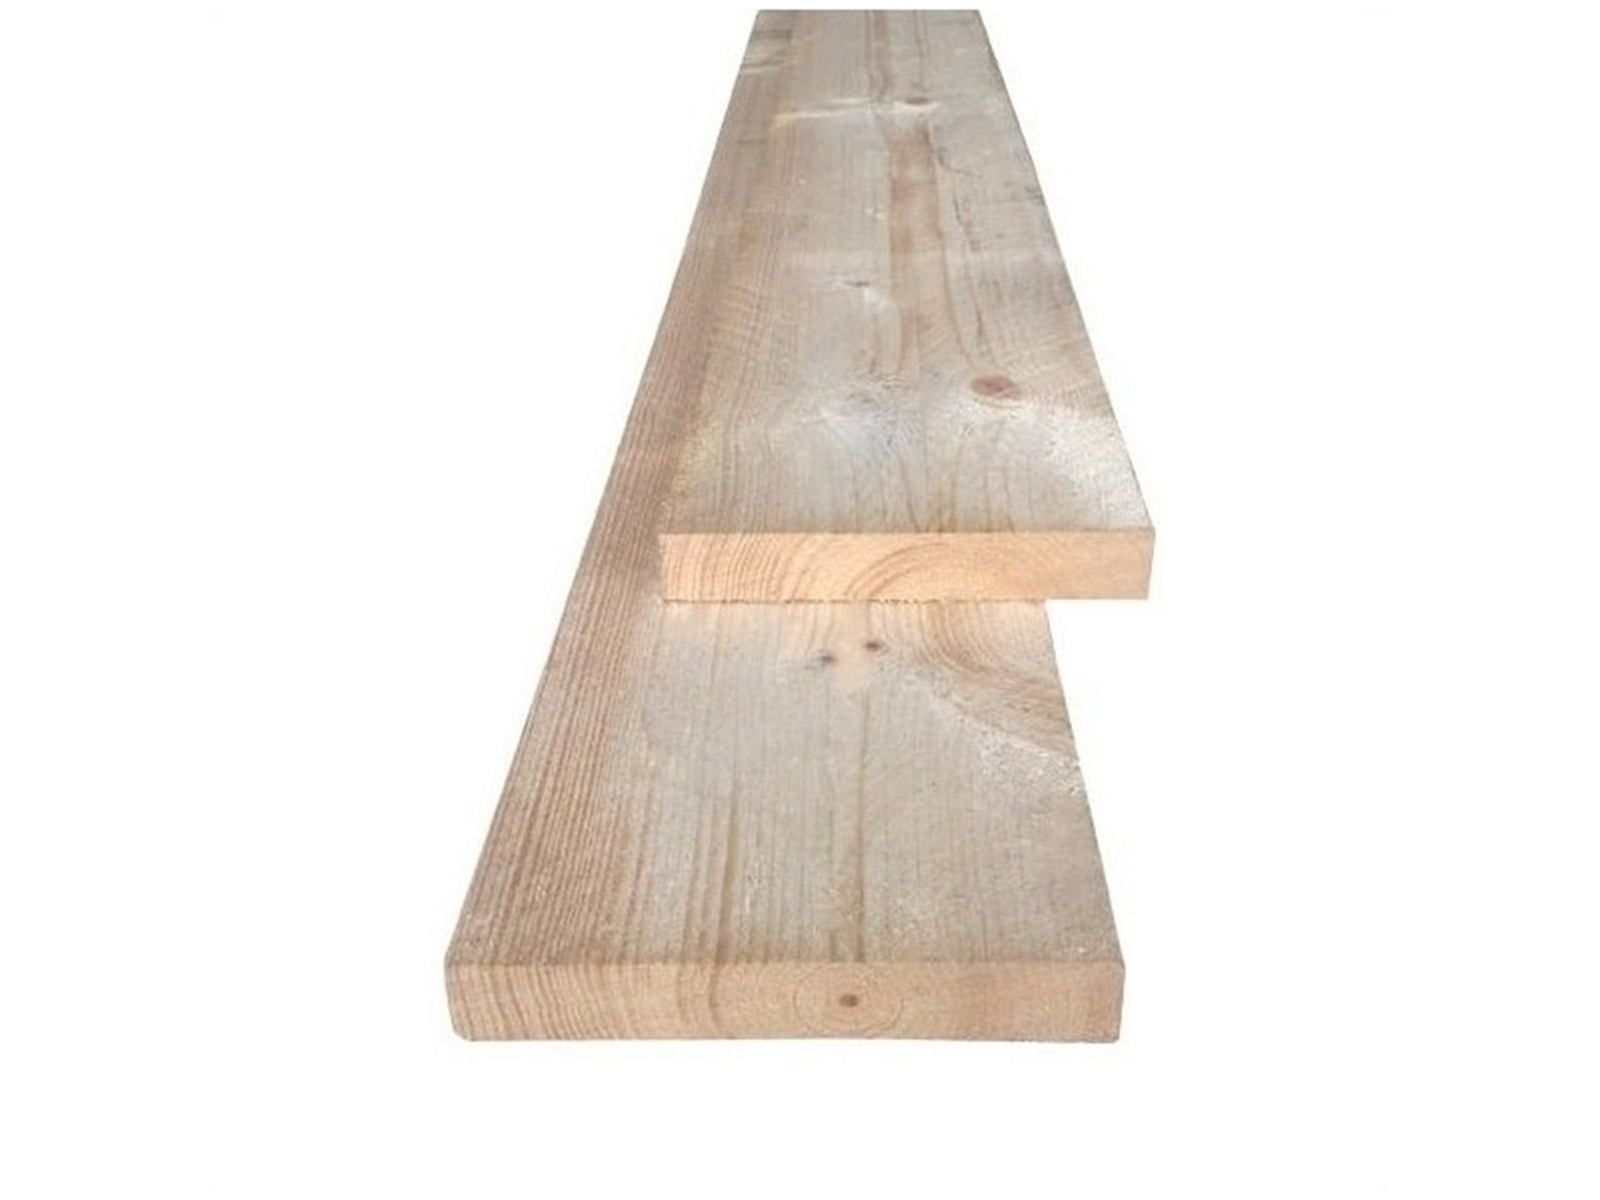 Knikken karton ozon ME-vuren houten plank (steigerplank), 32x200mm